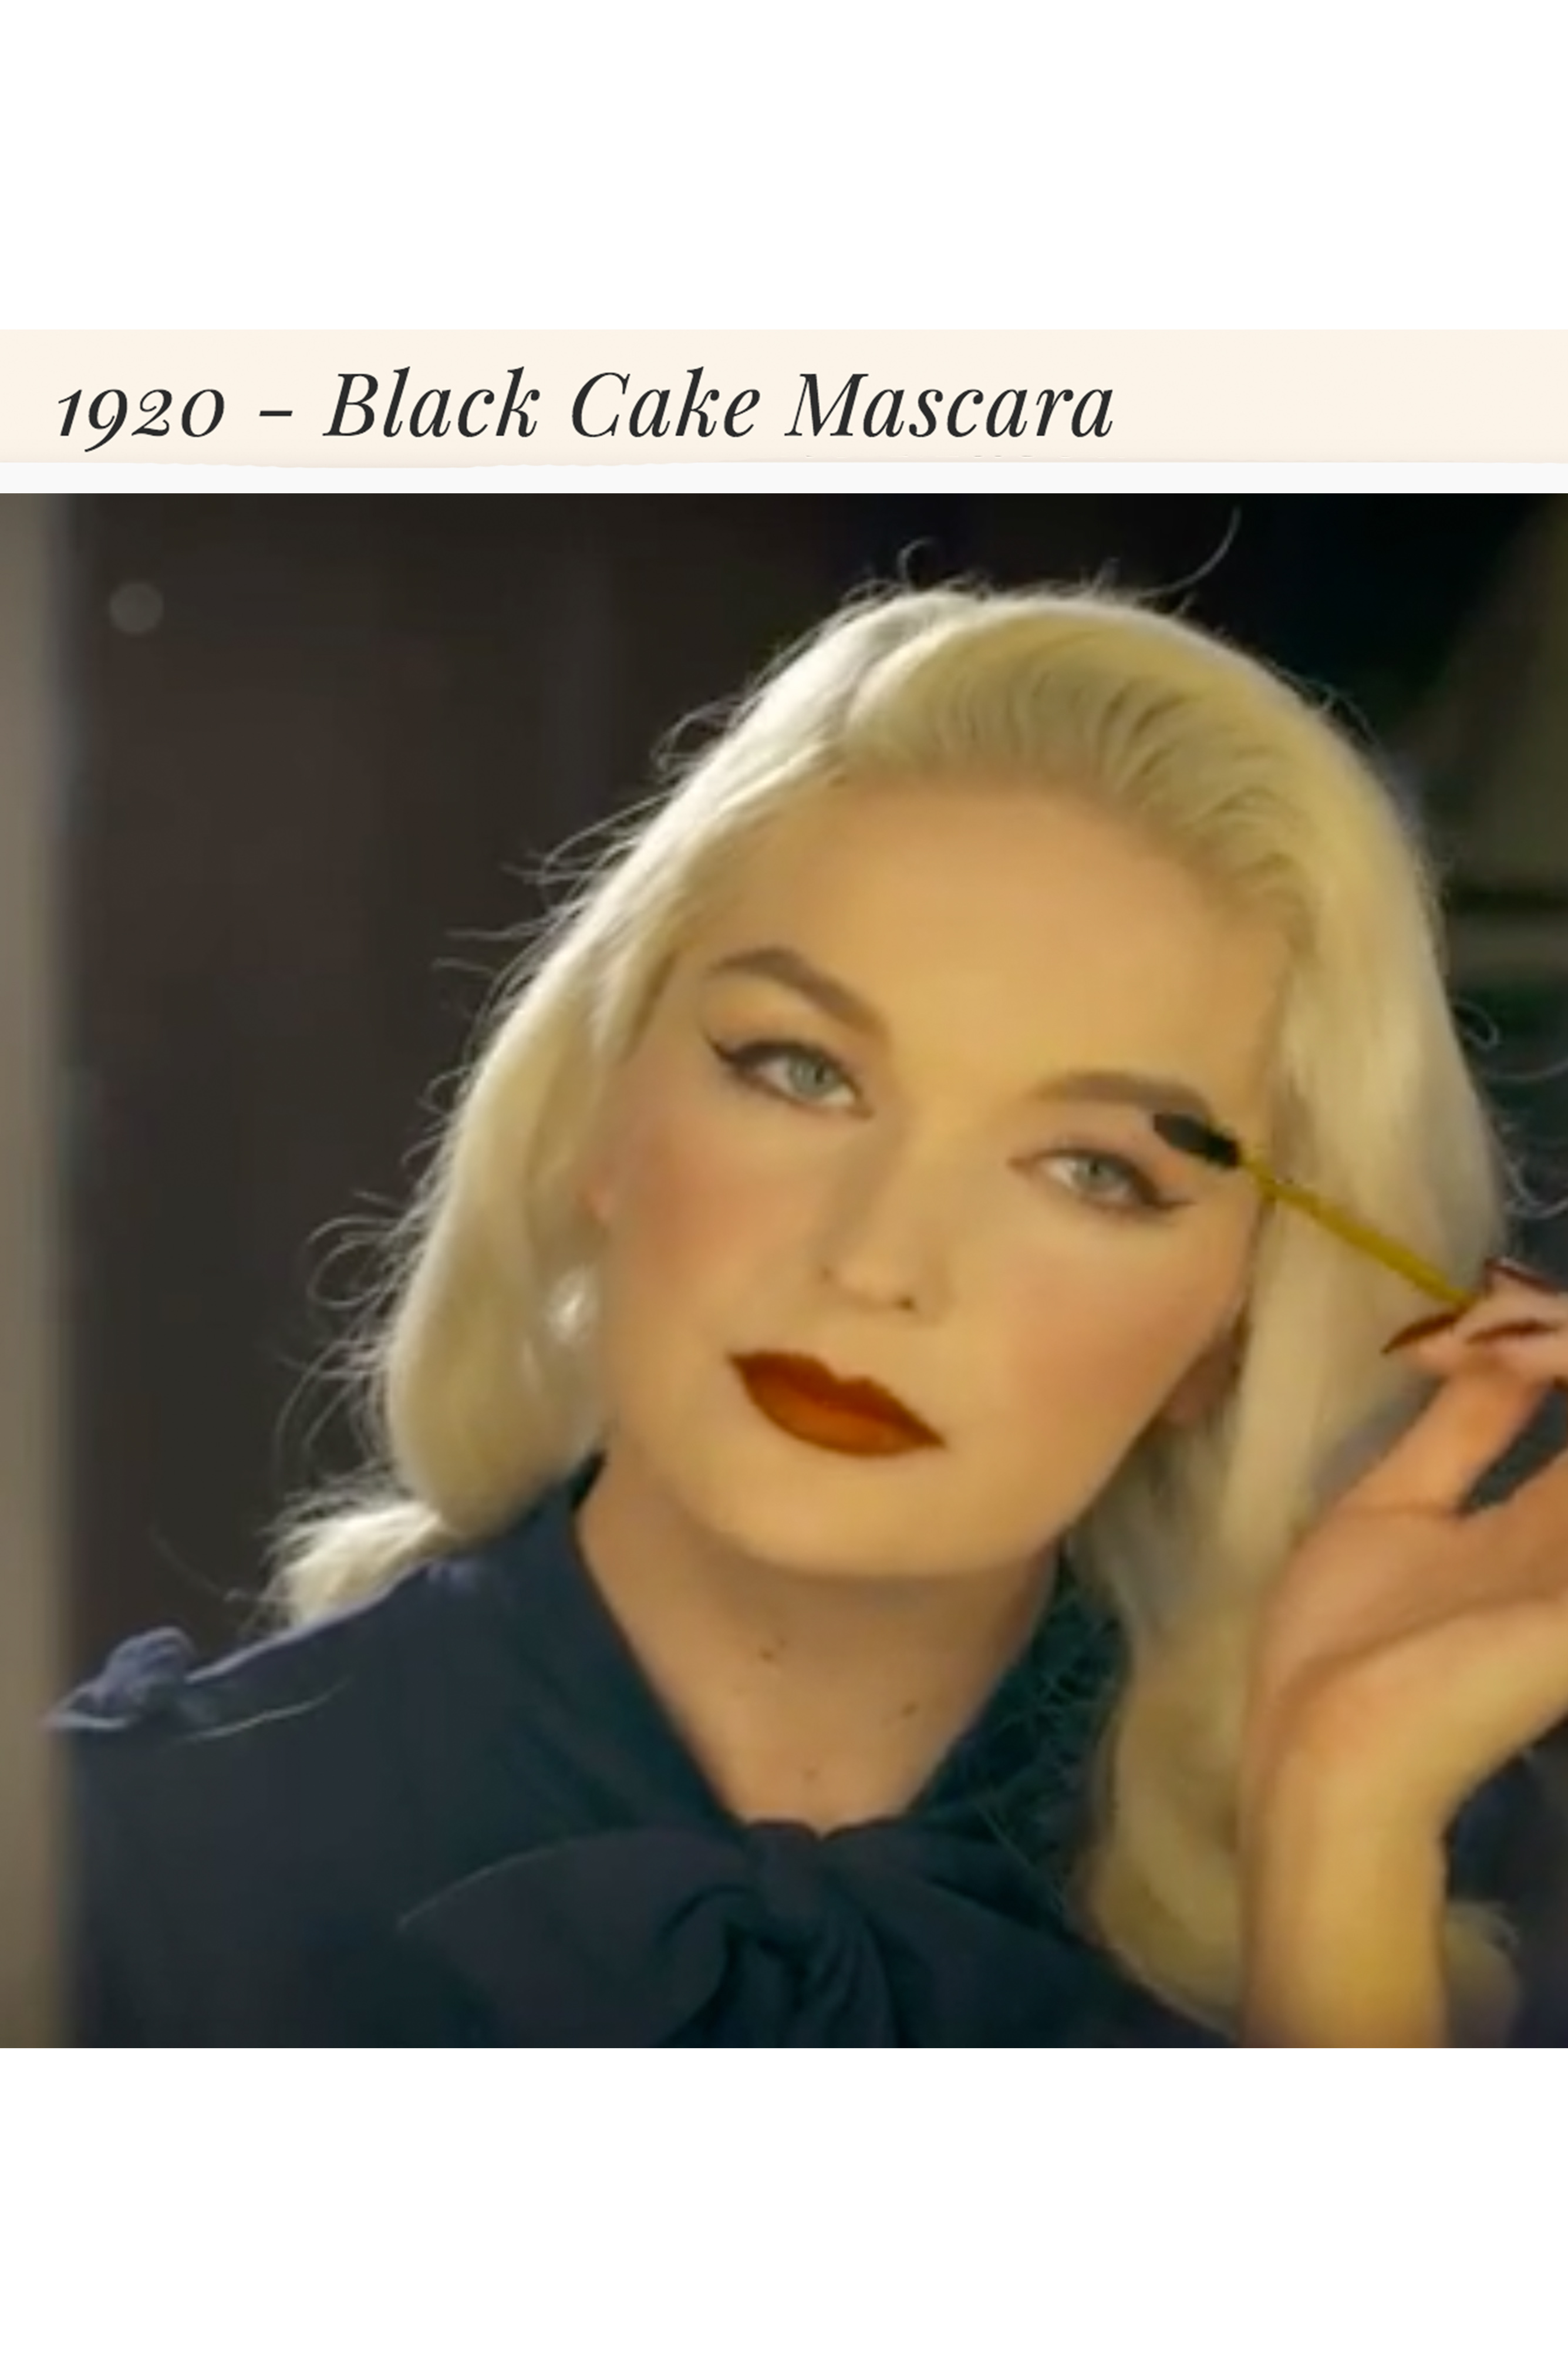 1920 - Black Cake Mascara by Bésame